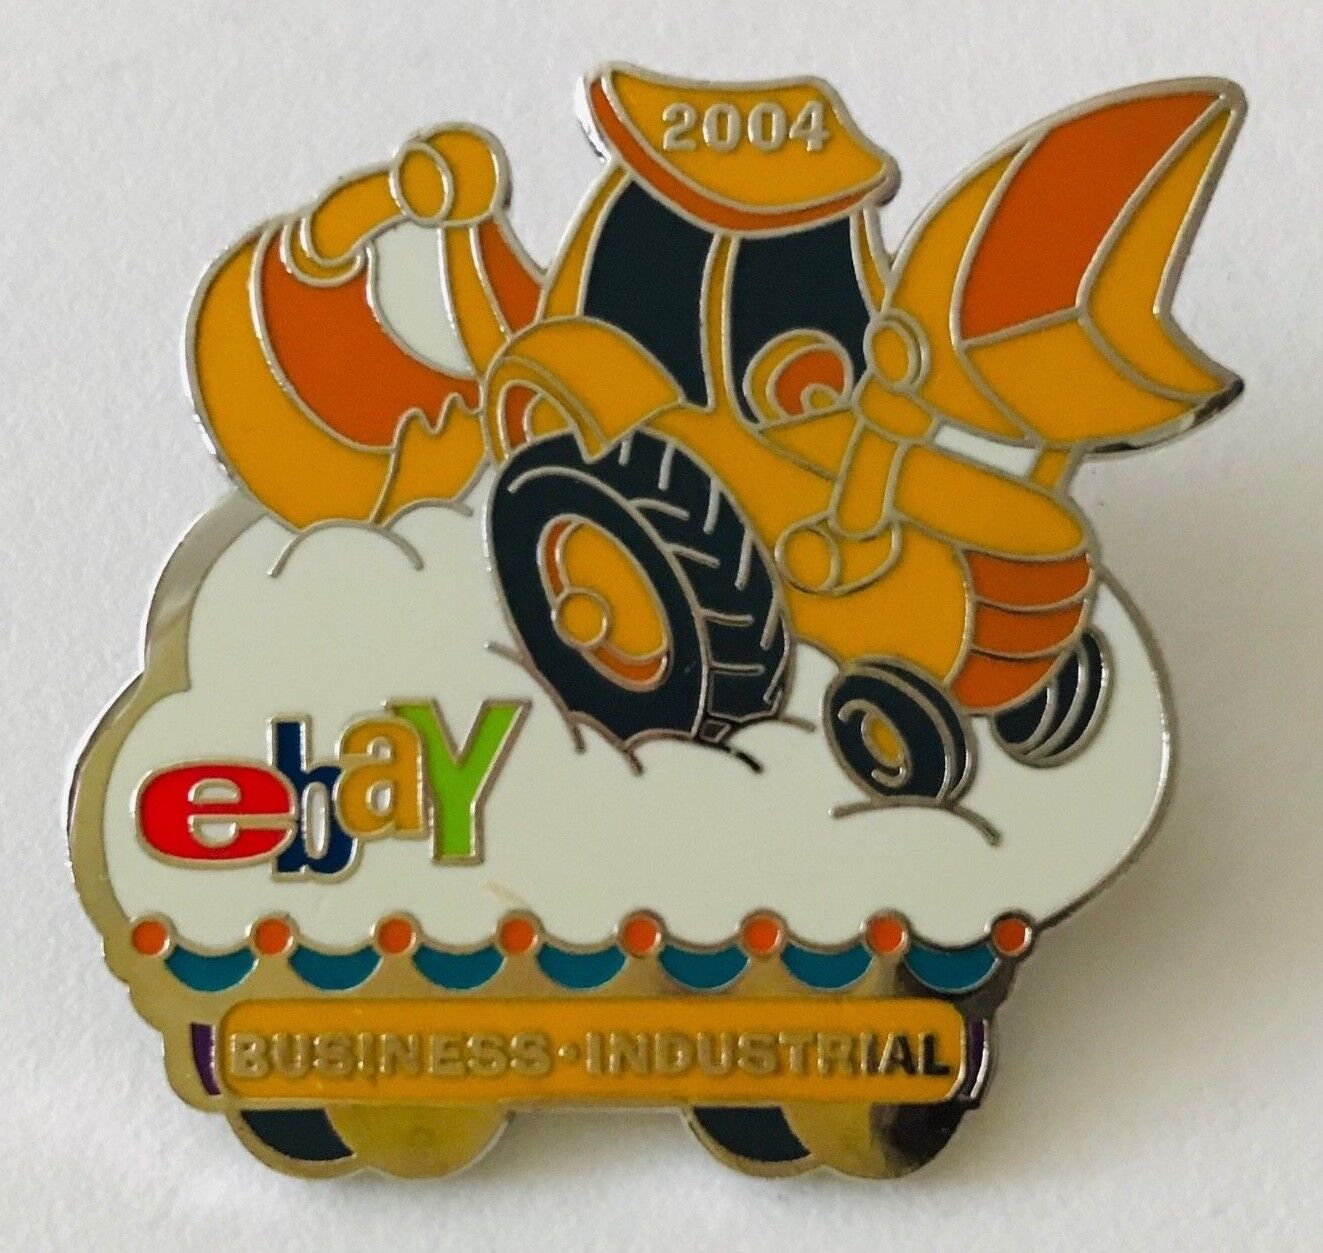 Ebay Live 2004 Lapel Pin Business & Industrial Category Ebayana Ad Souvenir